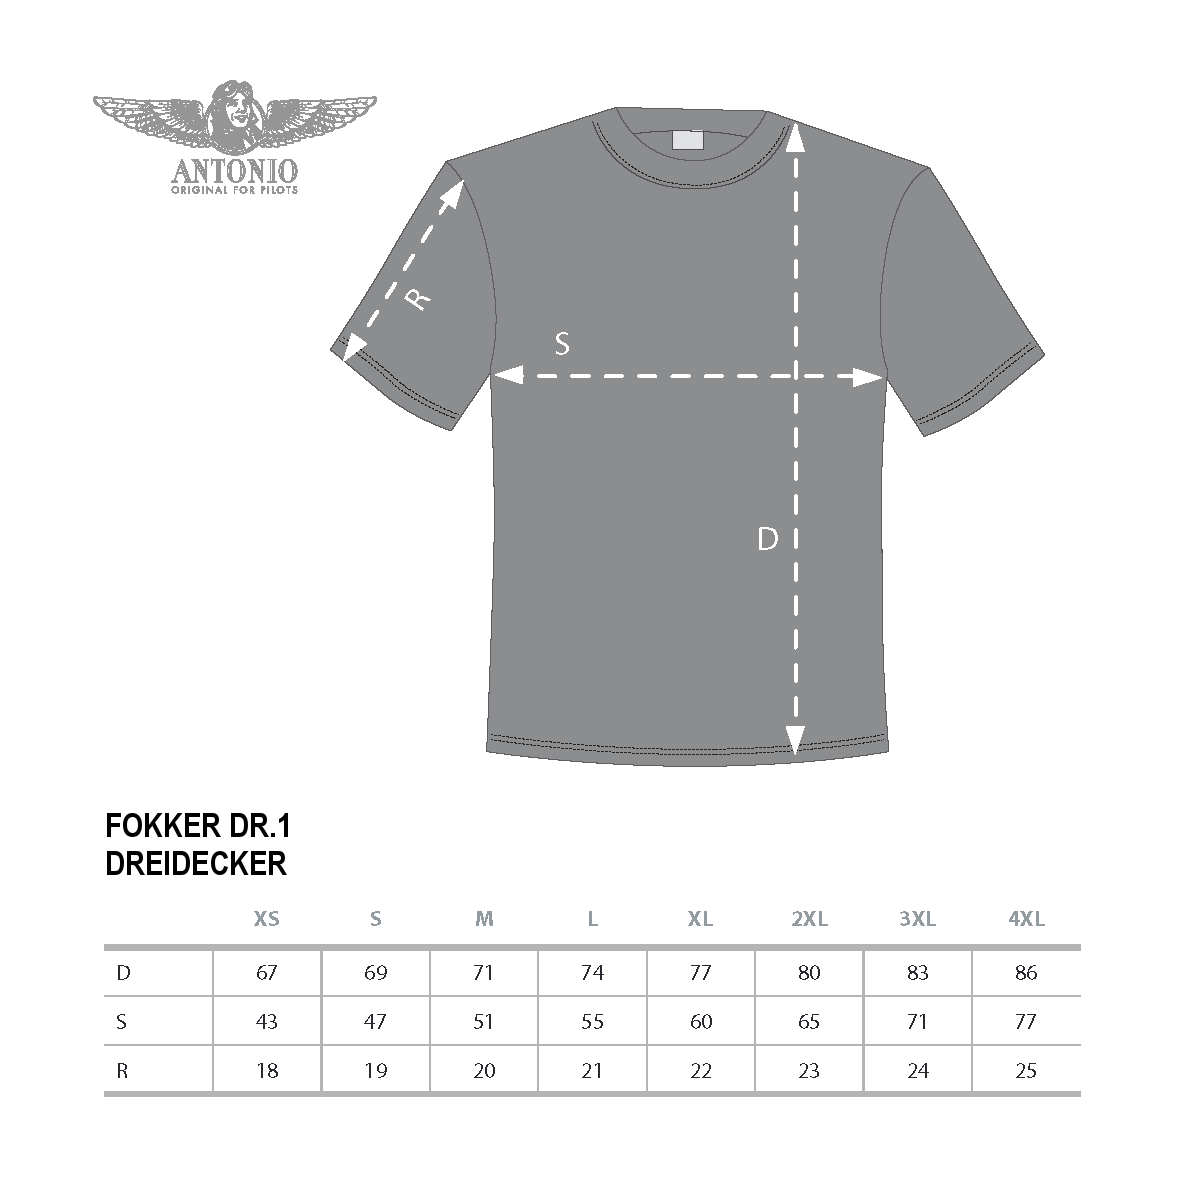 Antonio - T-Shirt Dreidecker Fokker DR.1